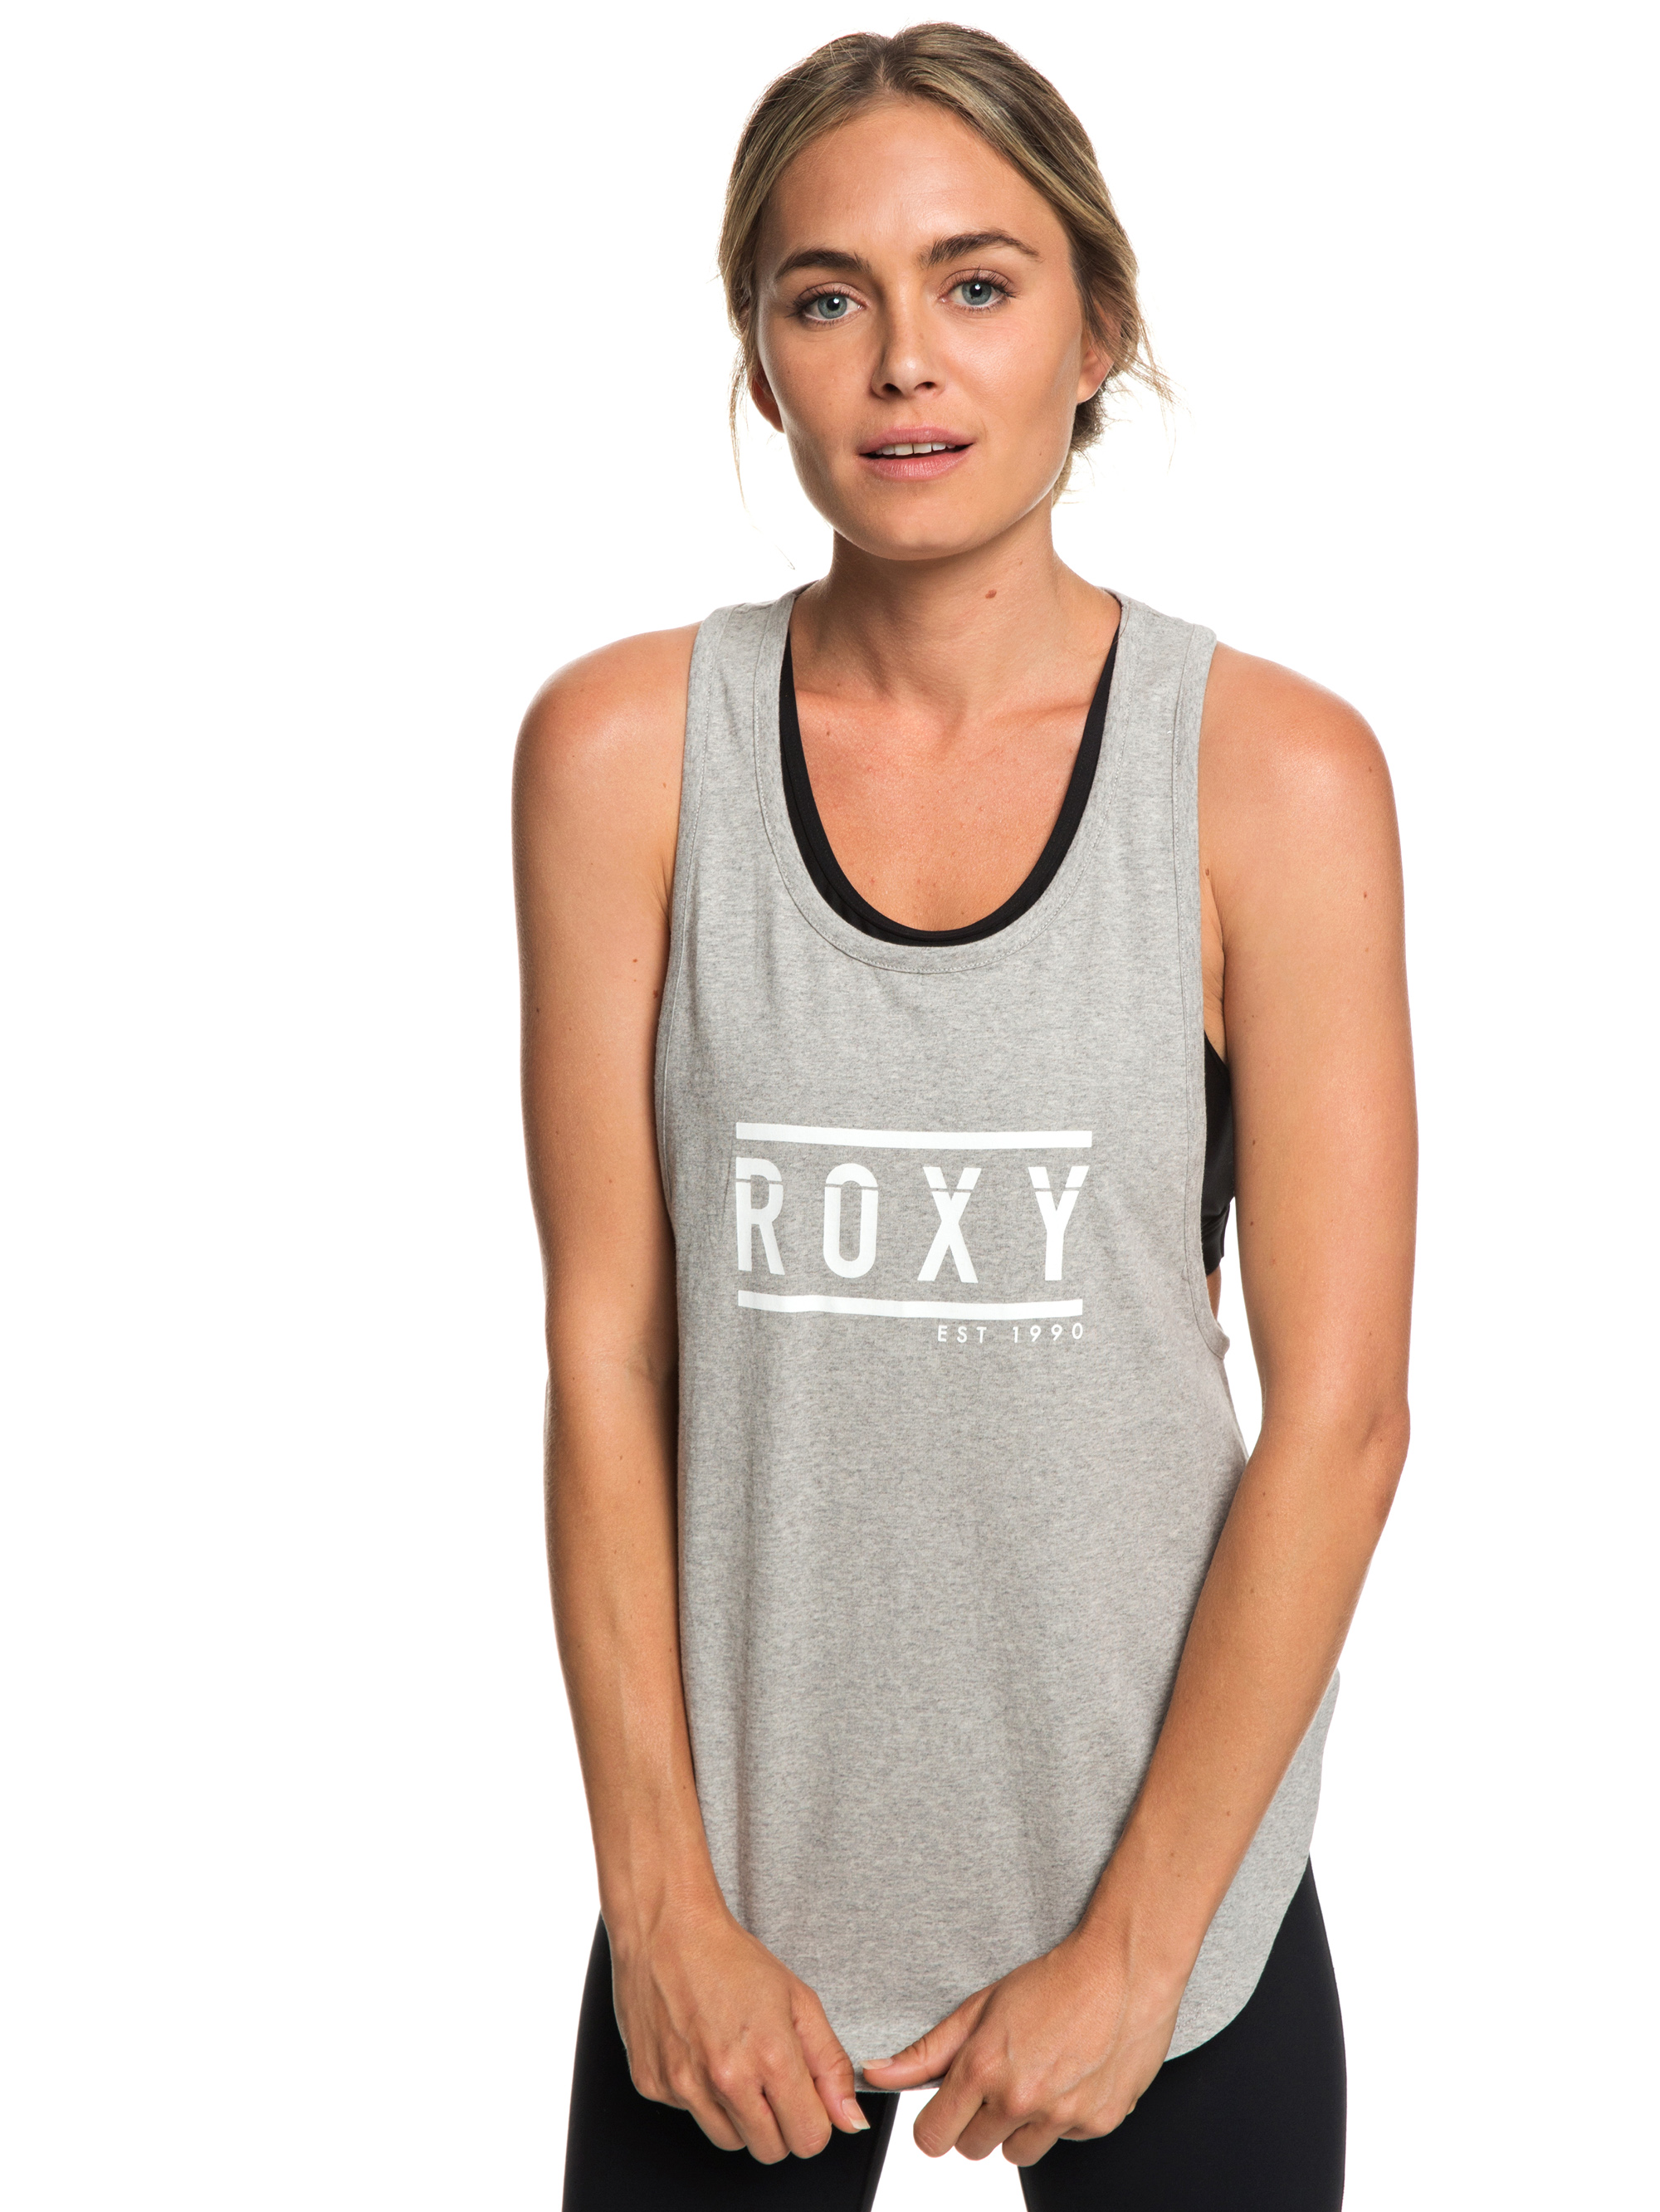 Жилетка Roxy. Roxy Light necked. Рокси Лайт грудь в белой футболке. Рокси лайт